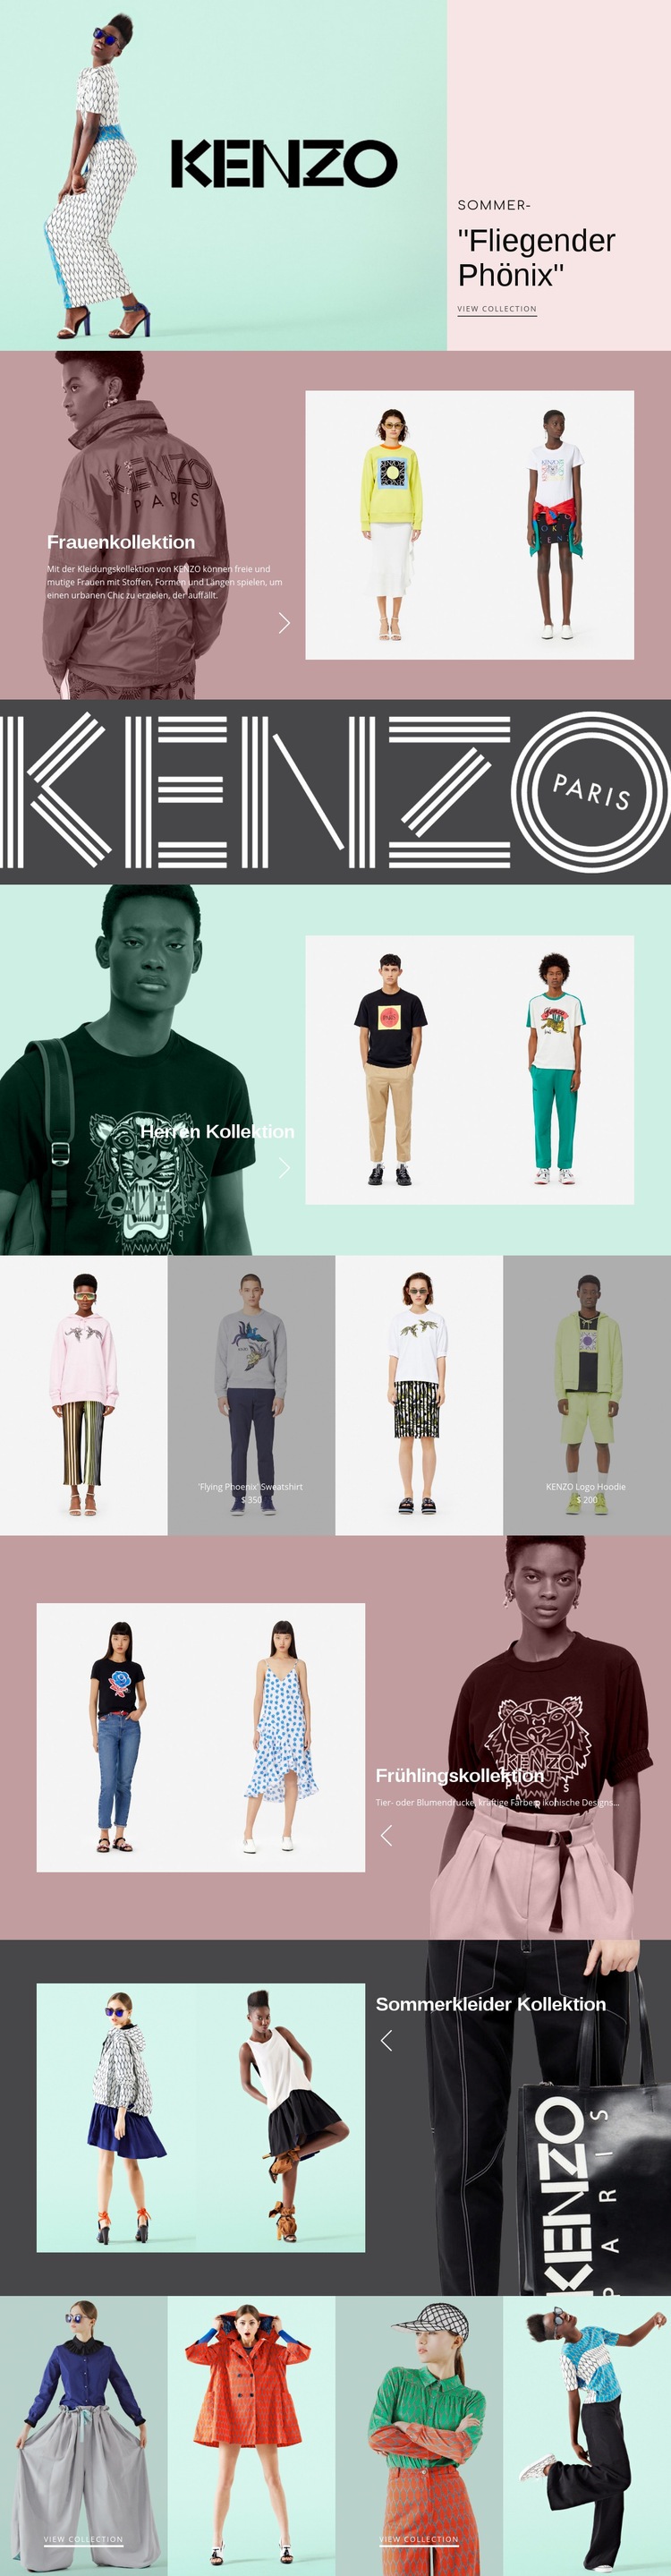 Atelier der modernen Mode Website design